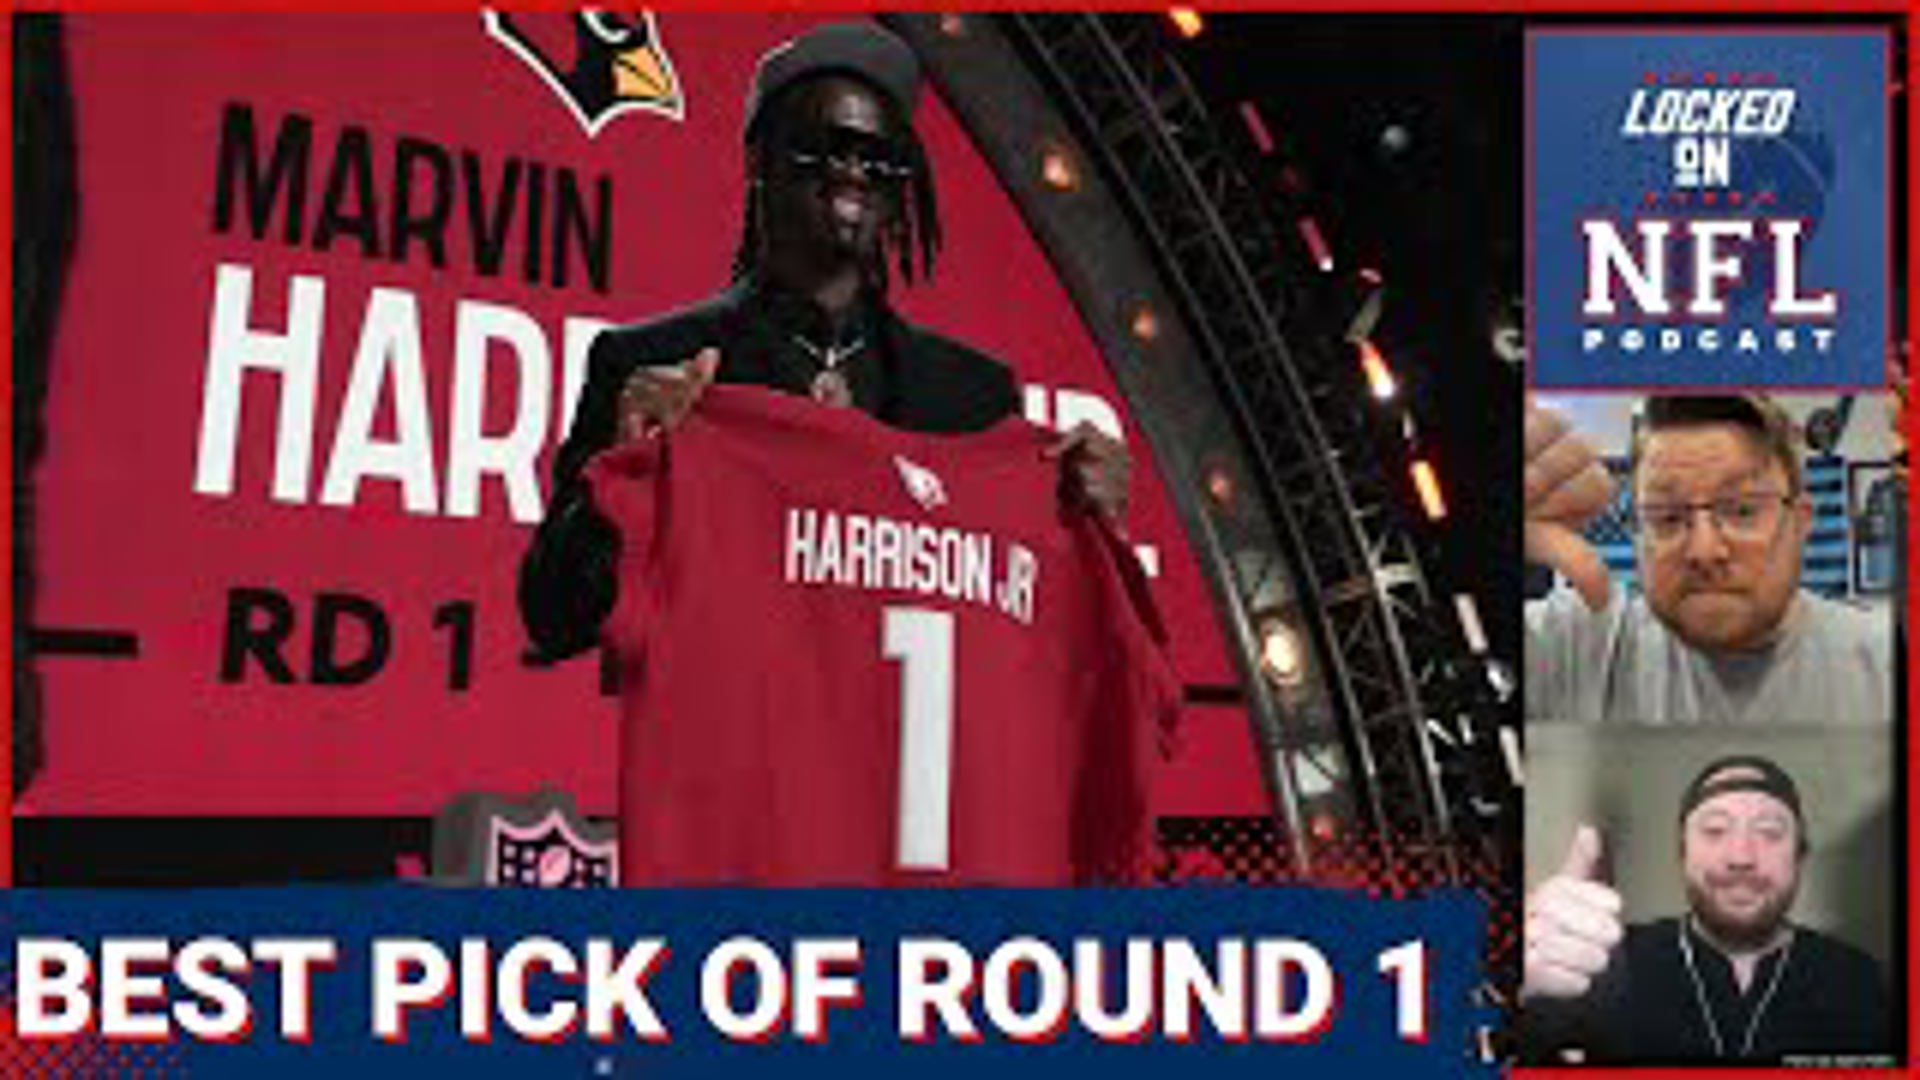 Arizona Cardinals Marvin Harrison Jr. BEST PICK on NFL Draft, Worst